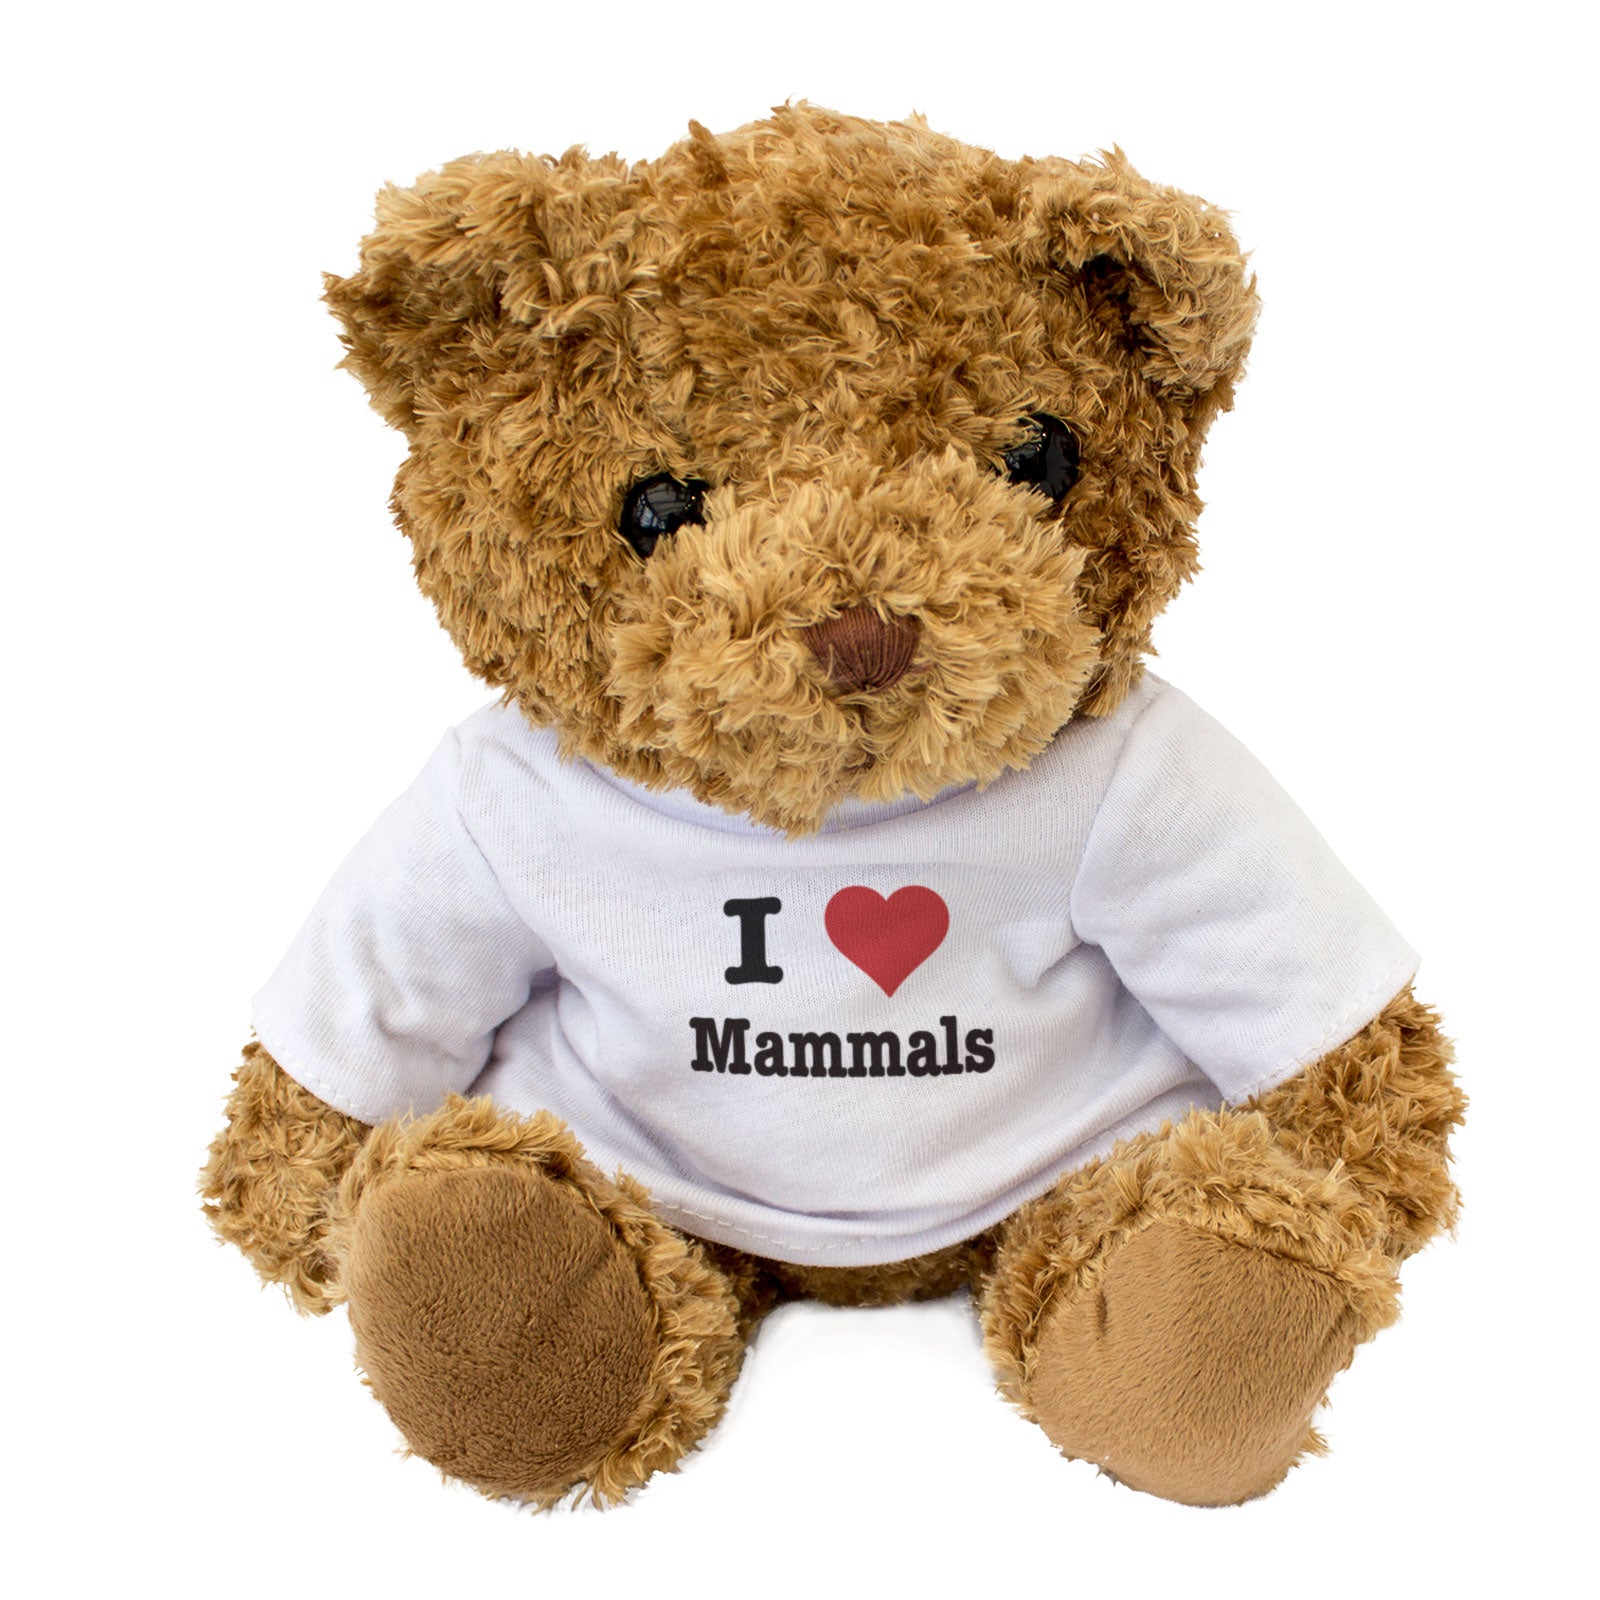 I Love Mammals - Teddy Bear